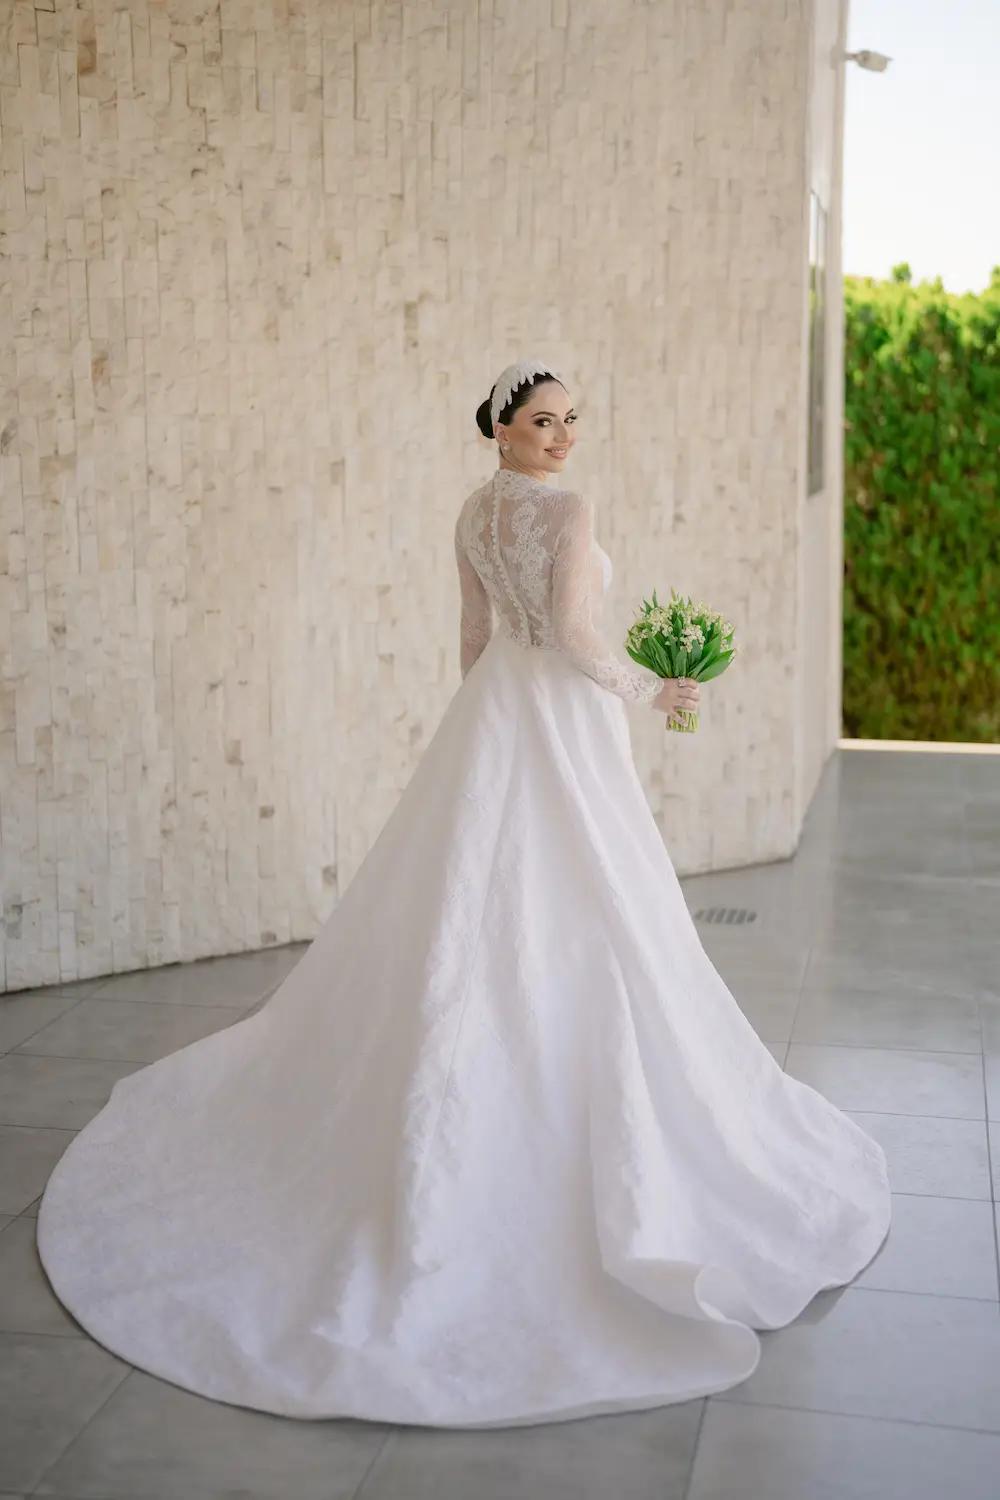 Irina Wears Long Sleeve Lace Ball Gown Wedding Dress. Desktop Image